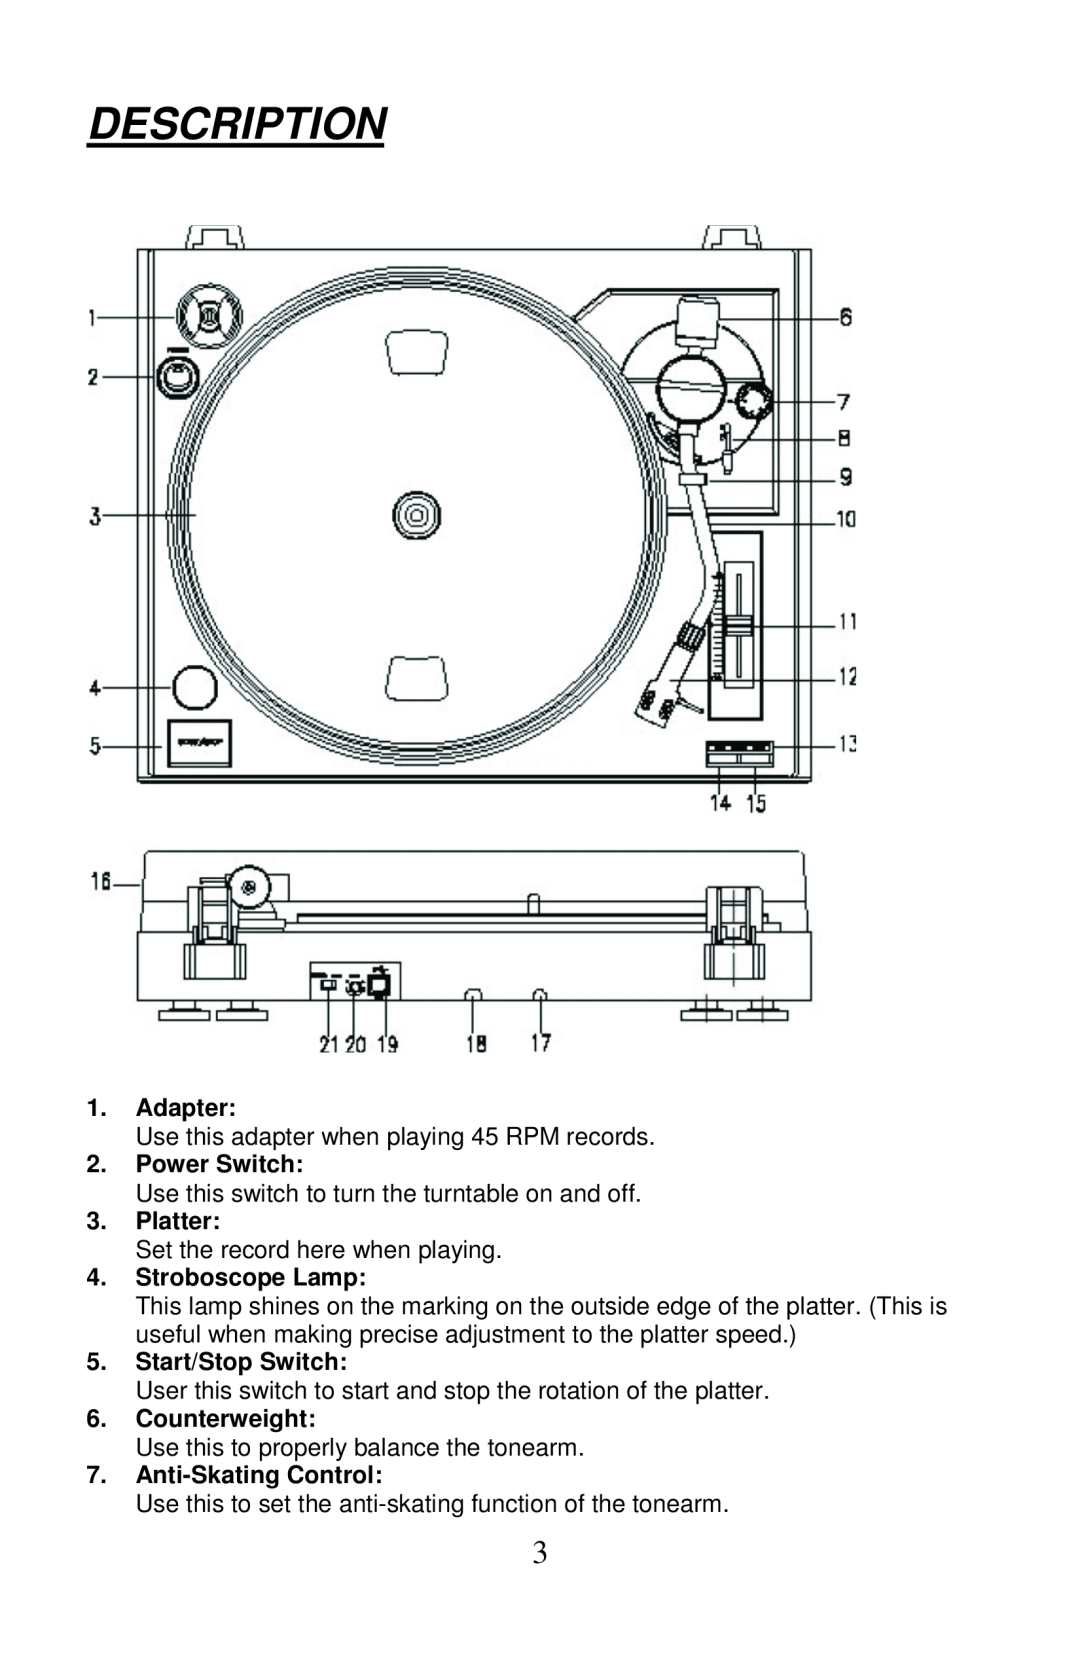 PYLE Audio PLTTB3U manual Description, Adapter, Power Switch, Platter, Stroboscope Lamp, Start/Stop Switch, Counterweight 